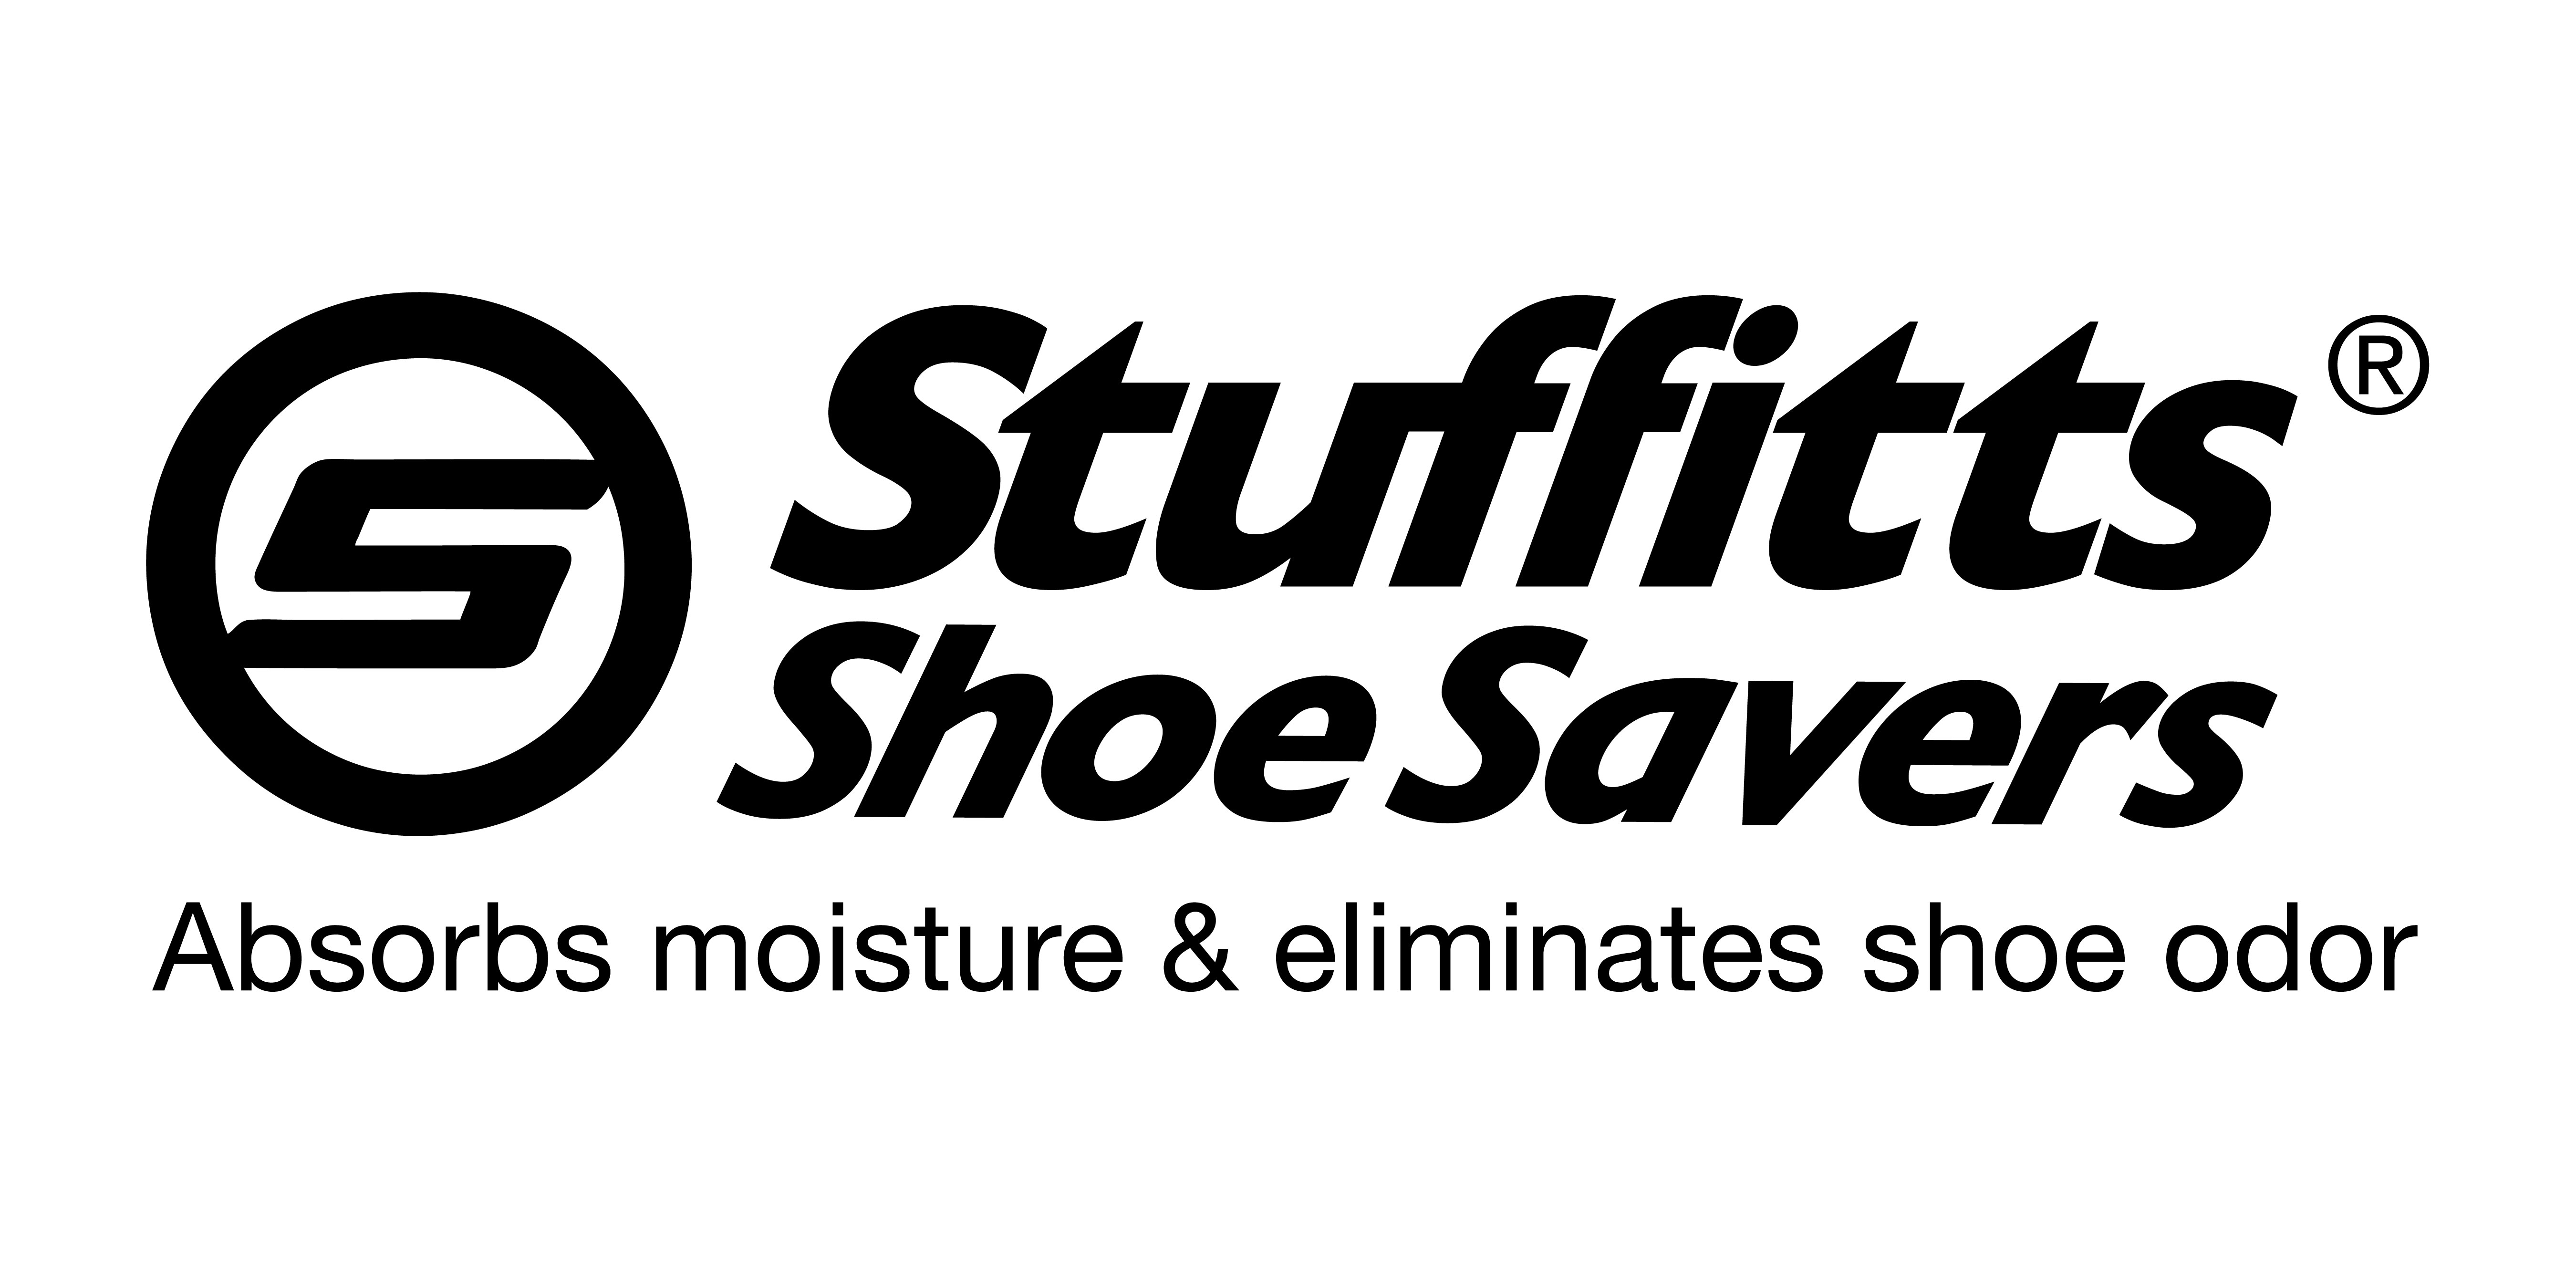 Shoe brand logos – Shoes online